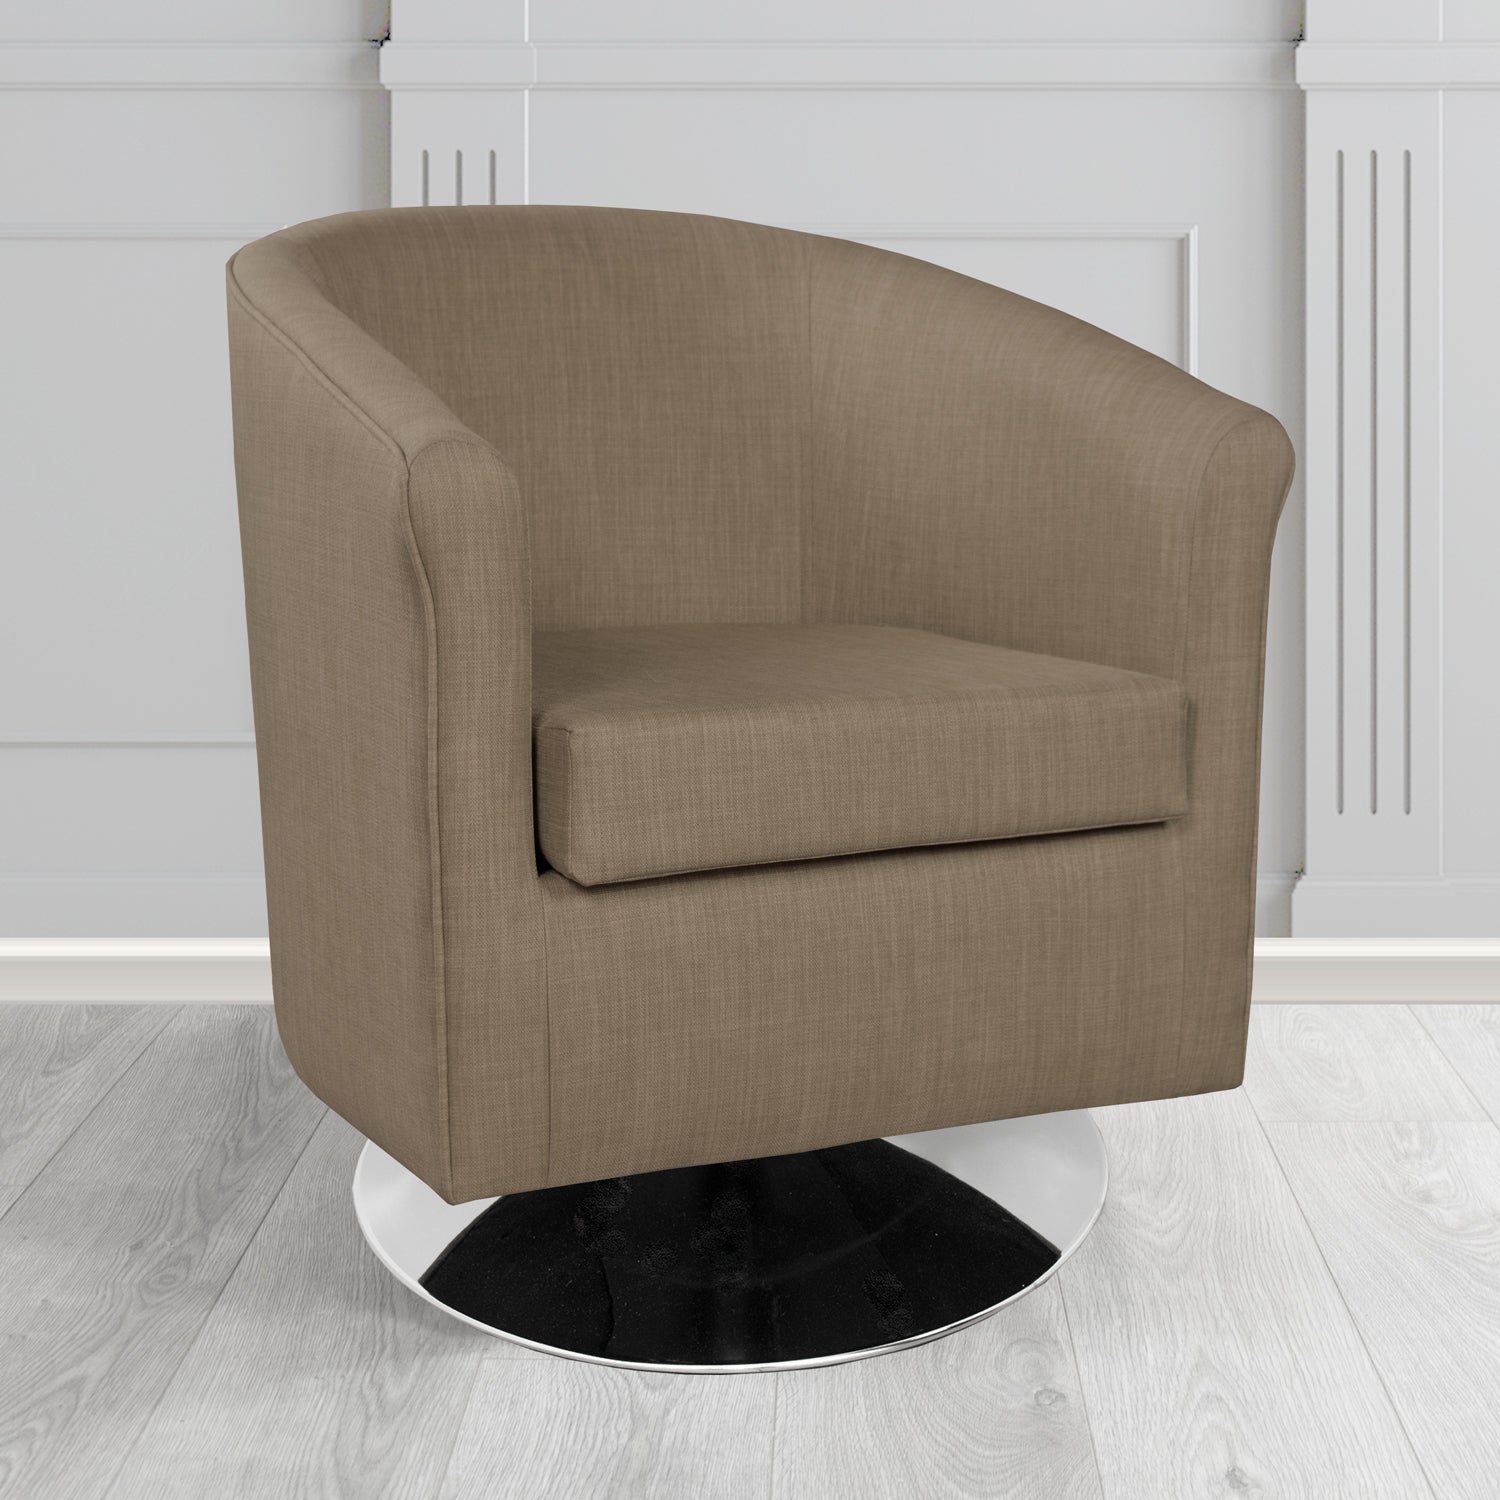 Tuscany Charles Nutmeg Plain Linen Fabric Swivel Tub Chair - The Tub Chair Shop